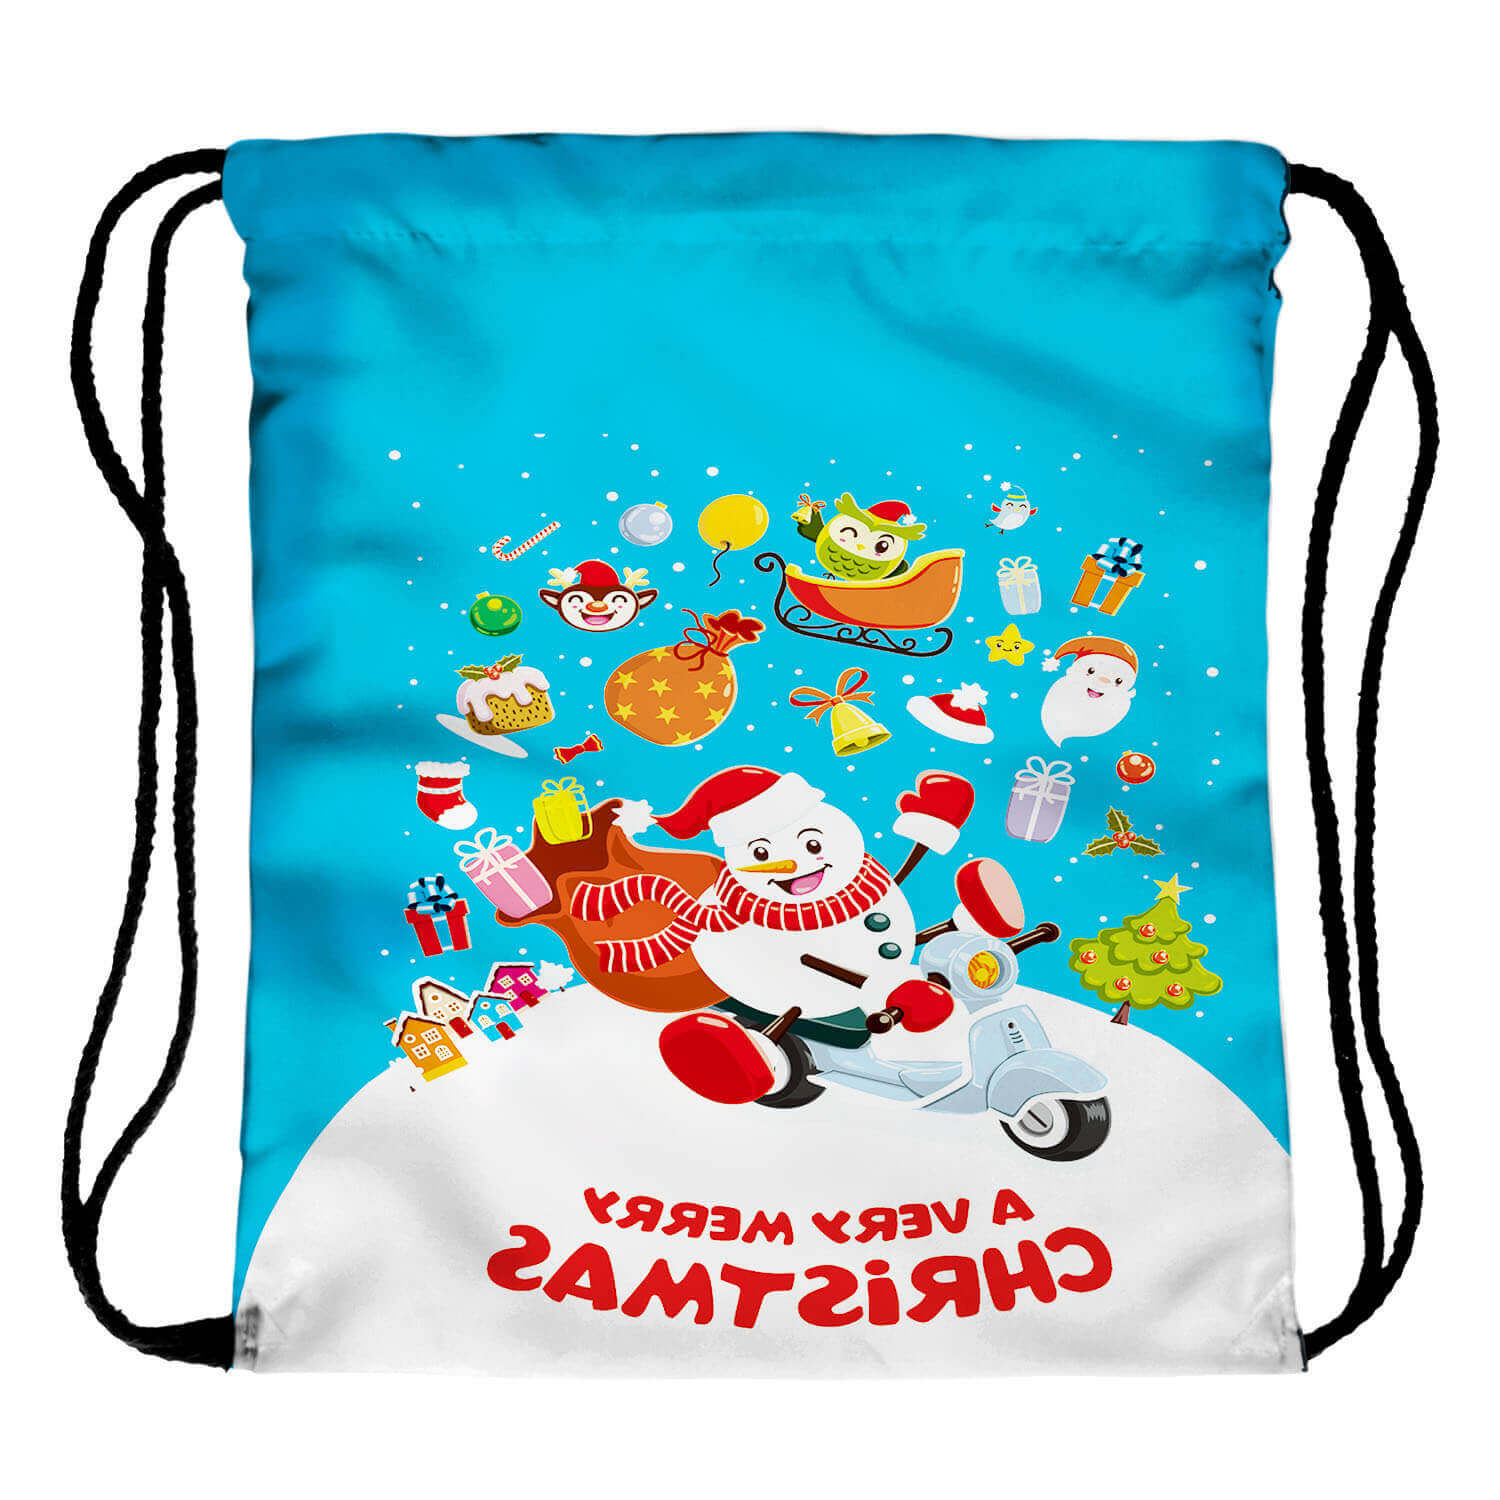 ebrain Christmas Drawstring Backpack Bag 1 - Christmas Drawstring Backpack Bag